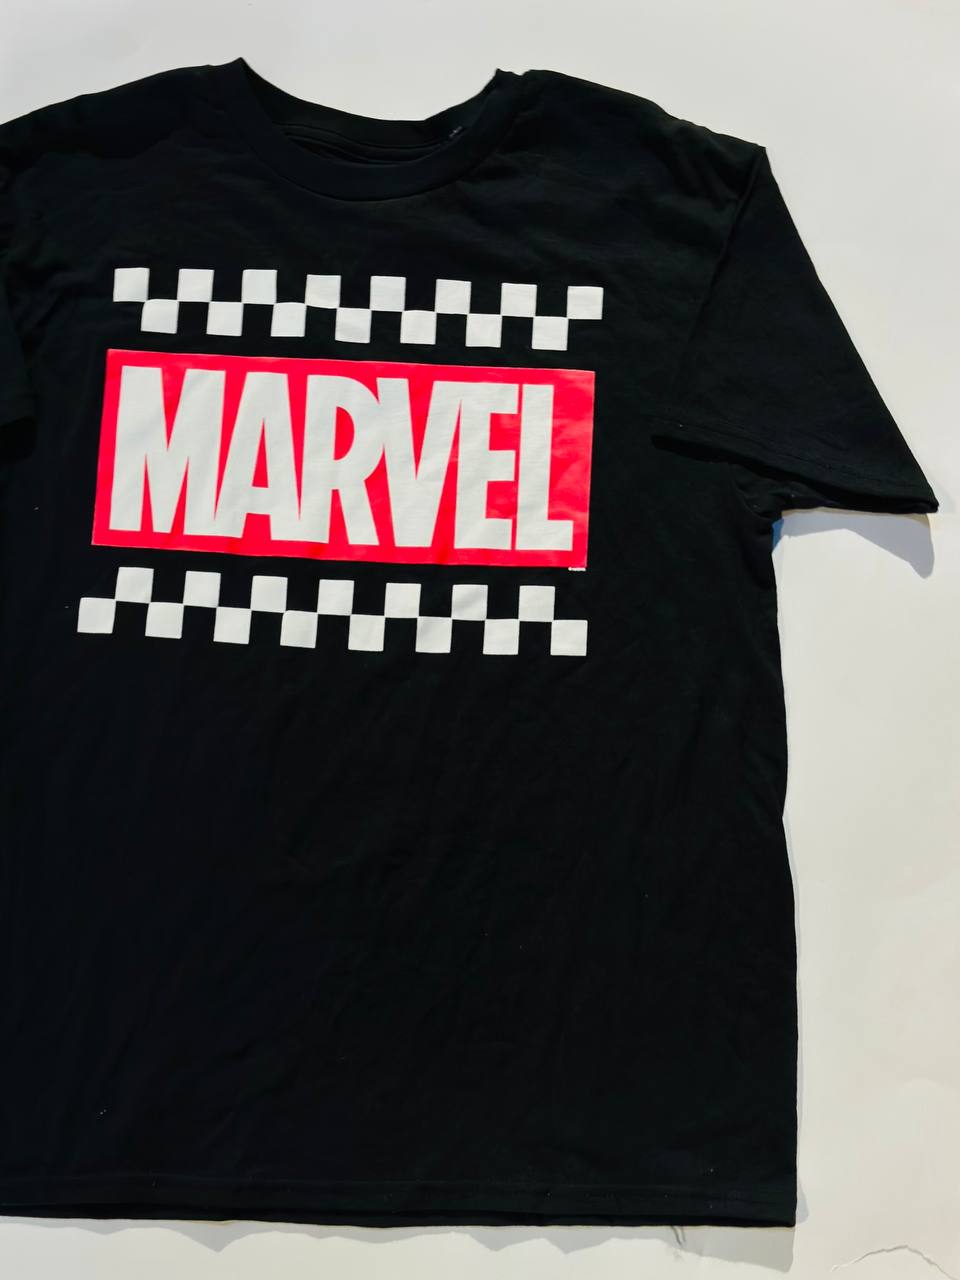 Marvel kids shirt